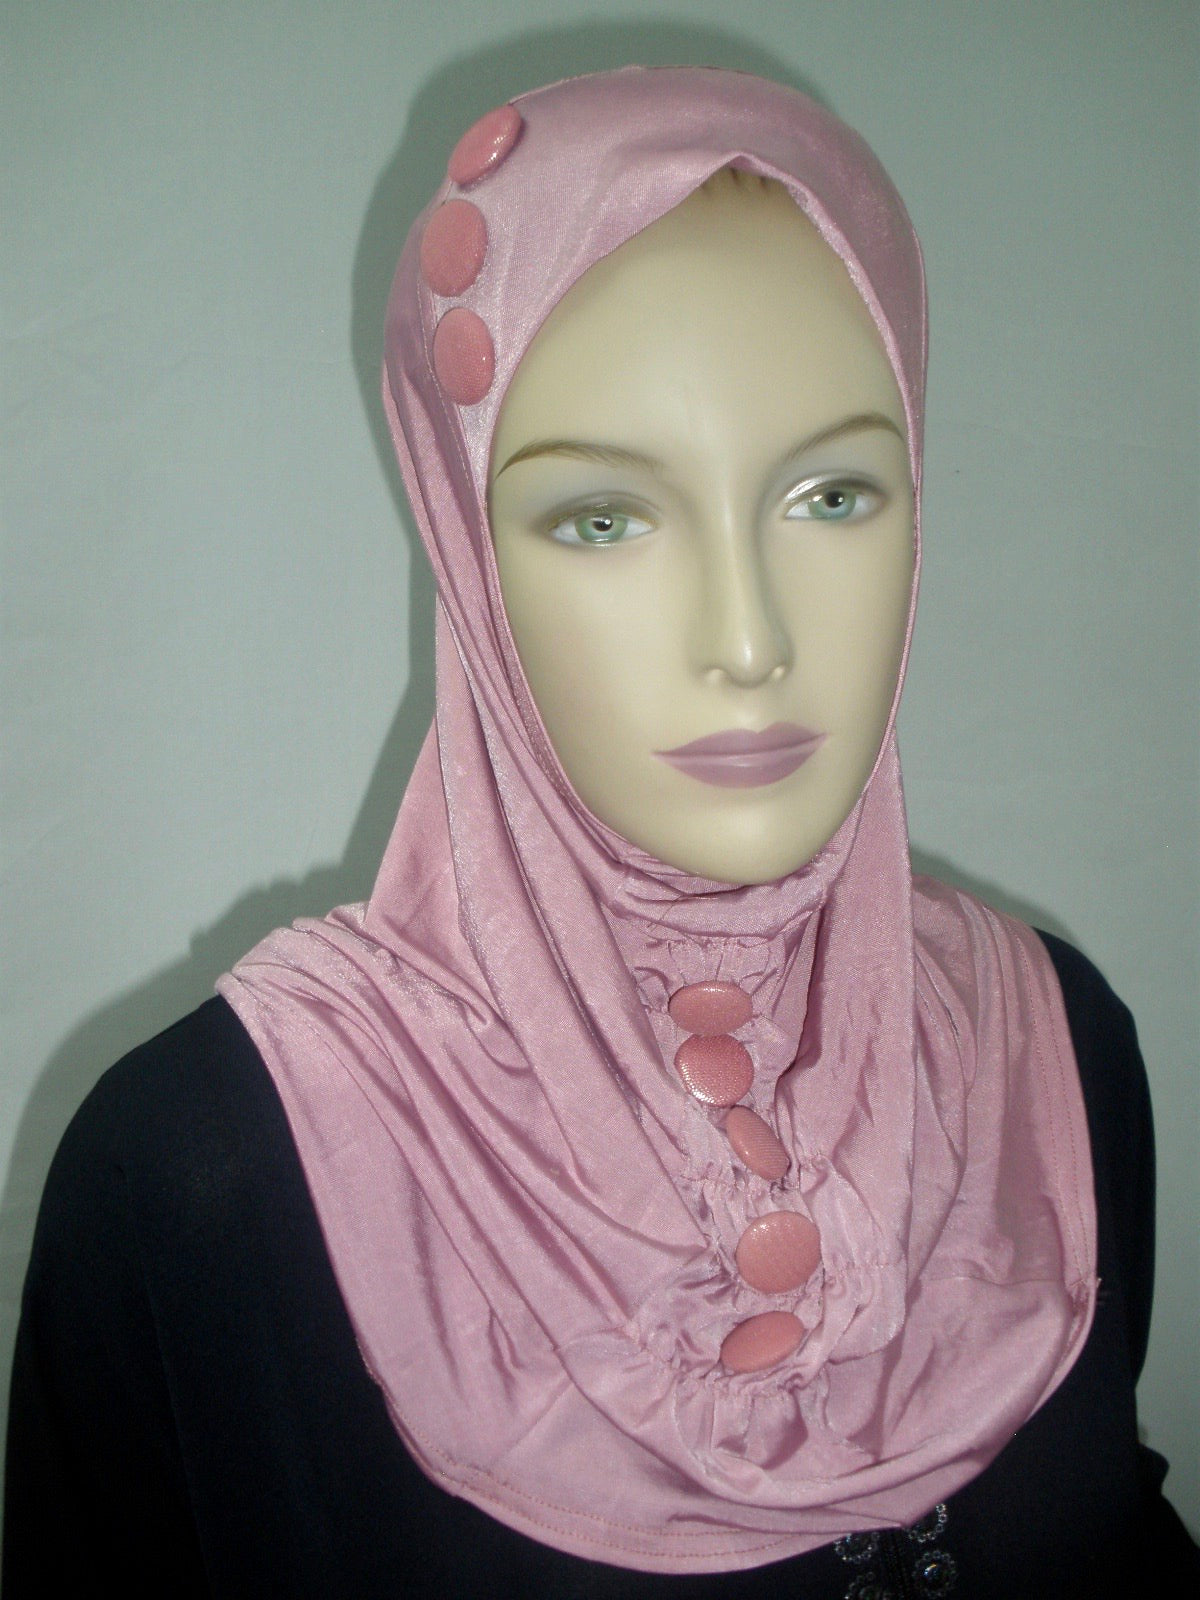 Button Design One Pc Ameera Hijab